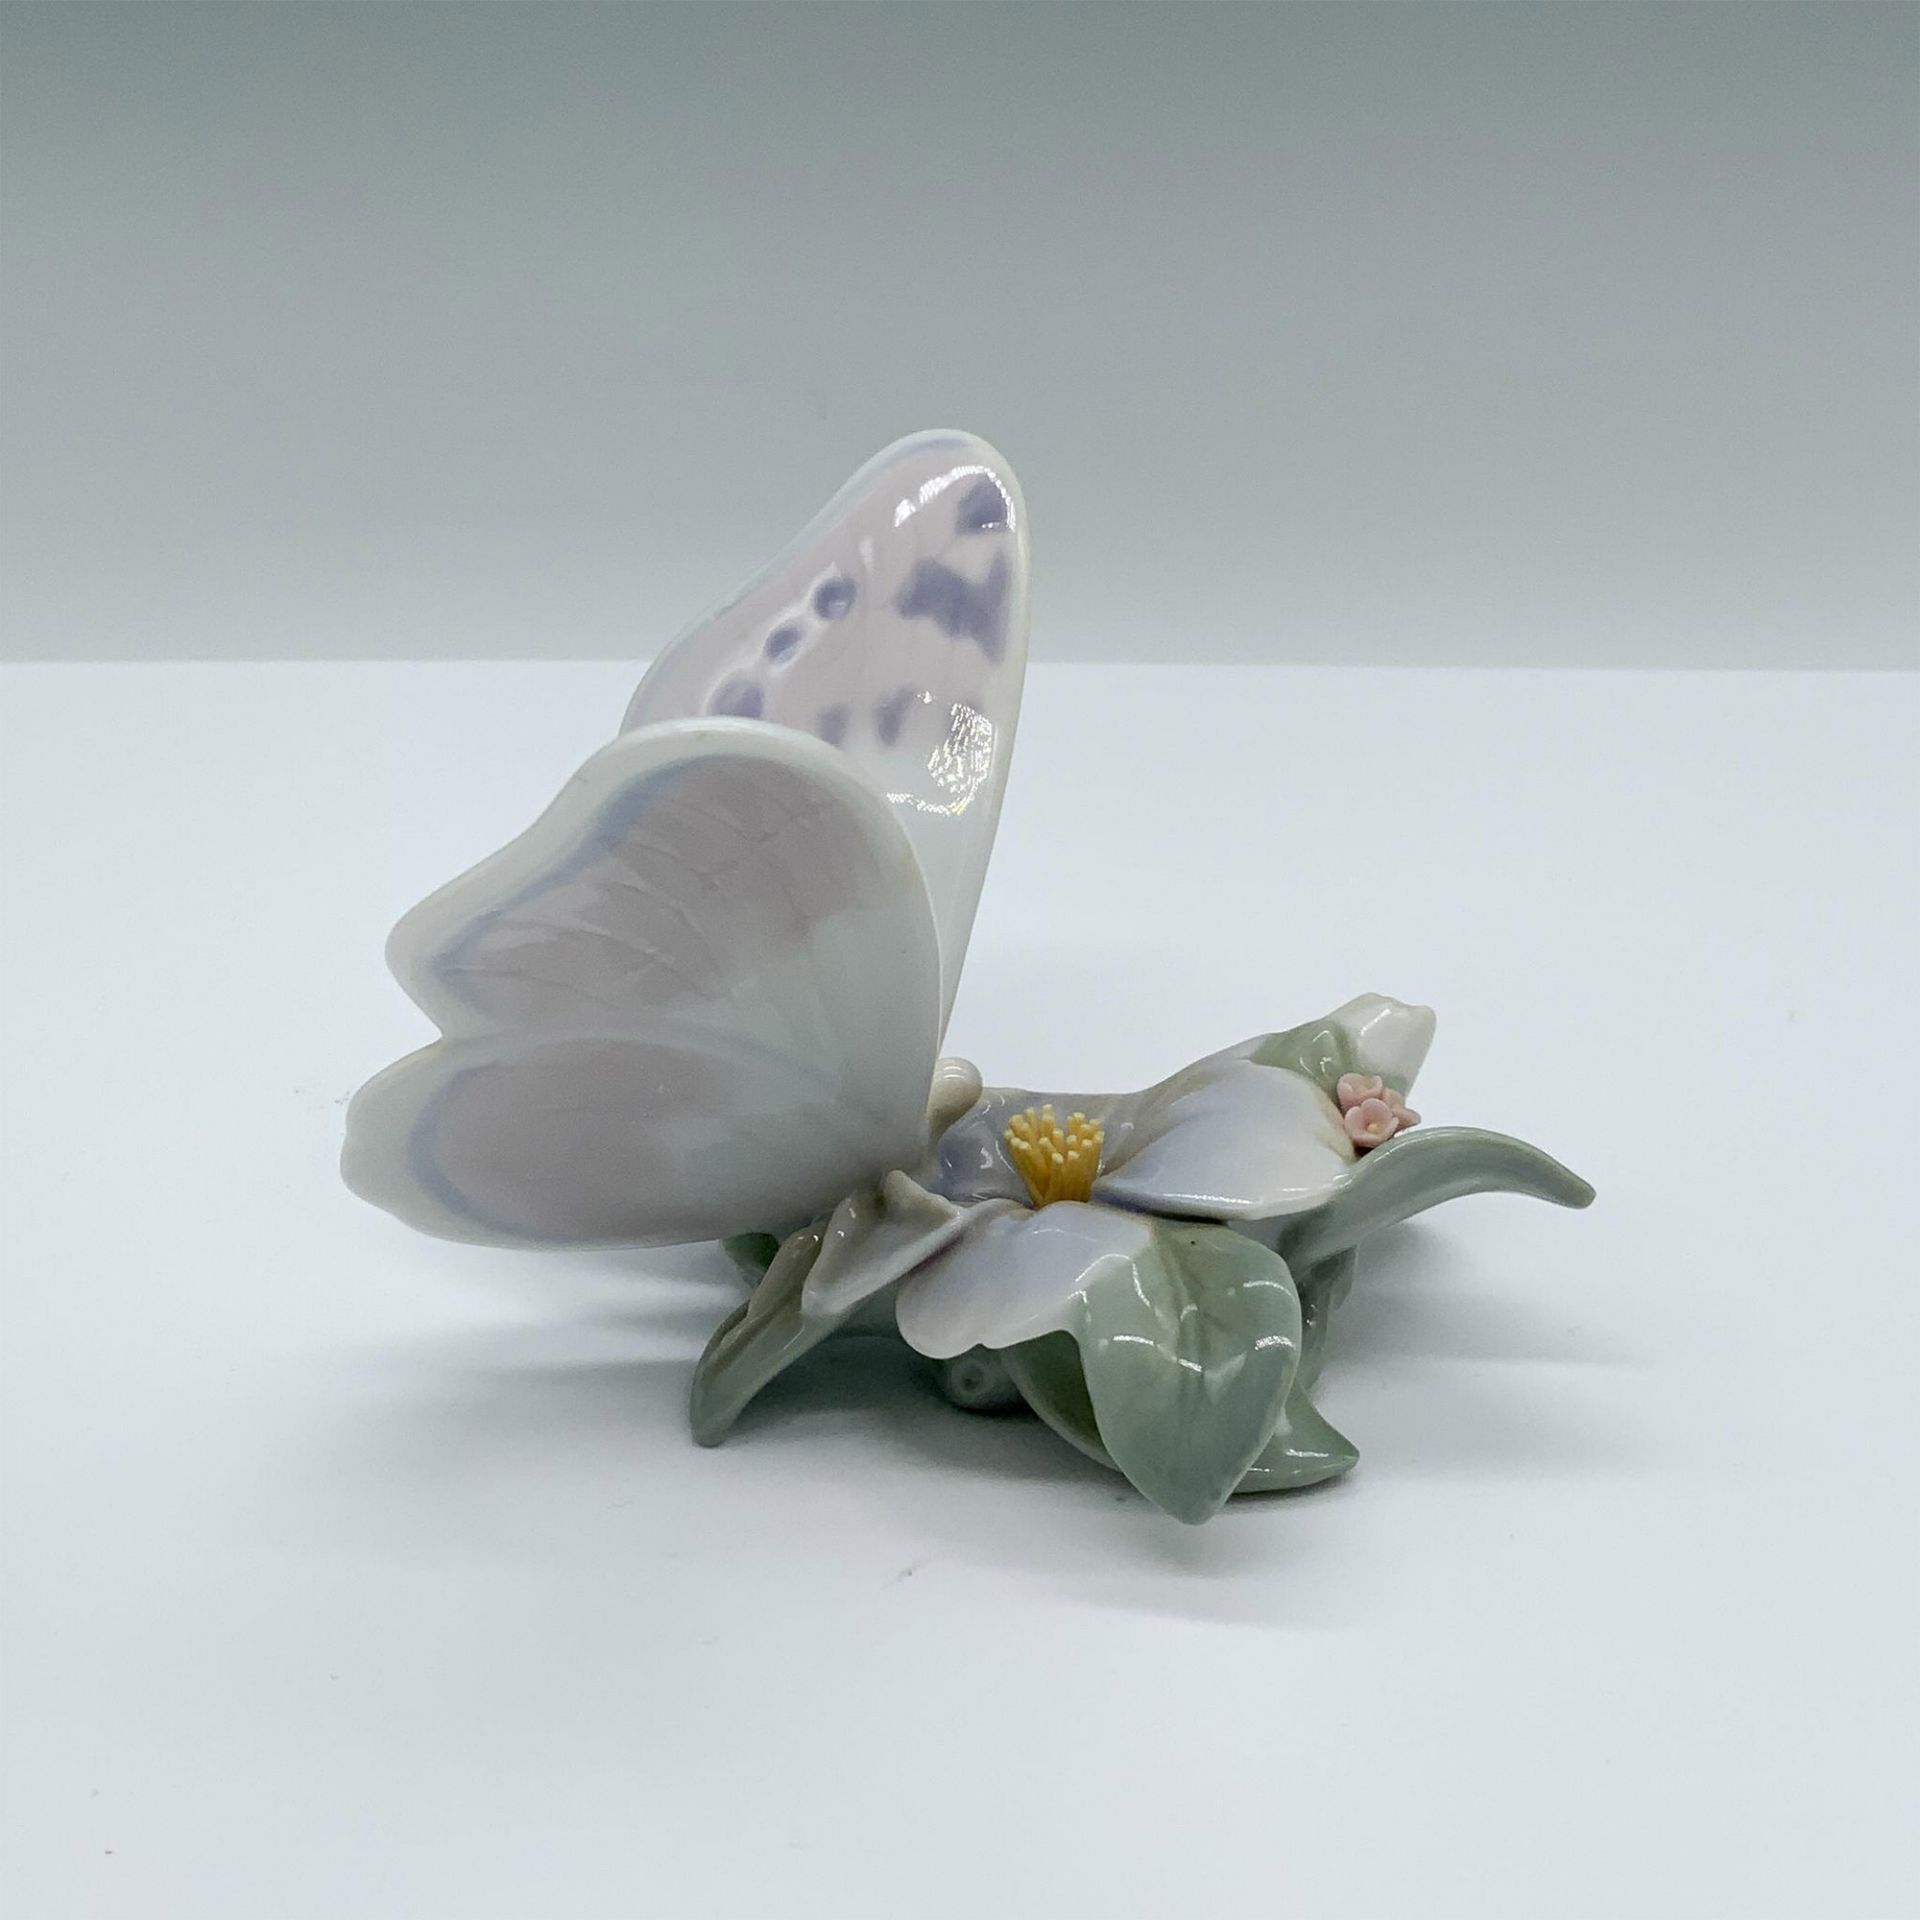 Refreshing Pause 1006330 - Lladro Porcelain Figurine - Image 3 of 4